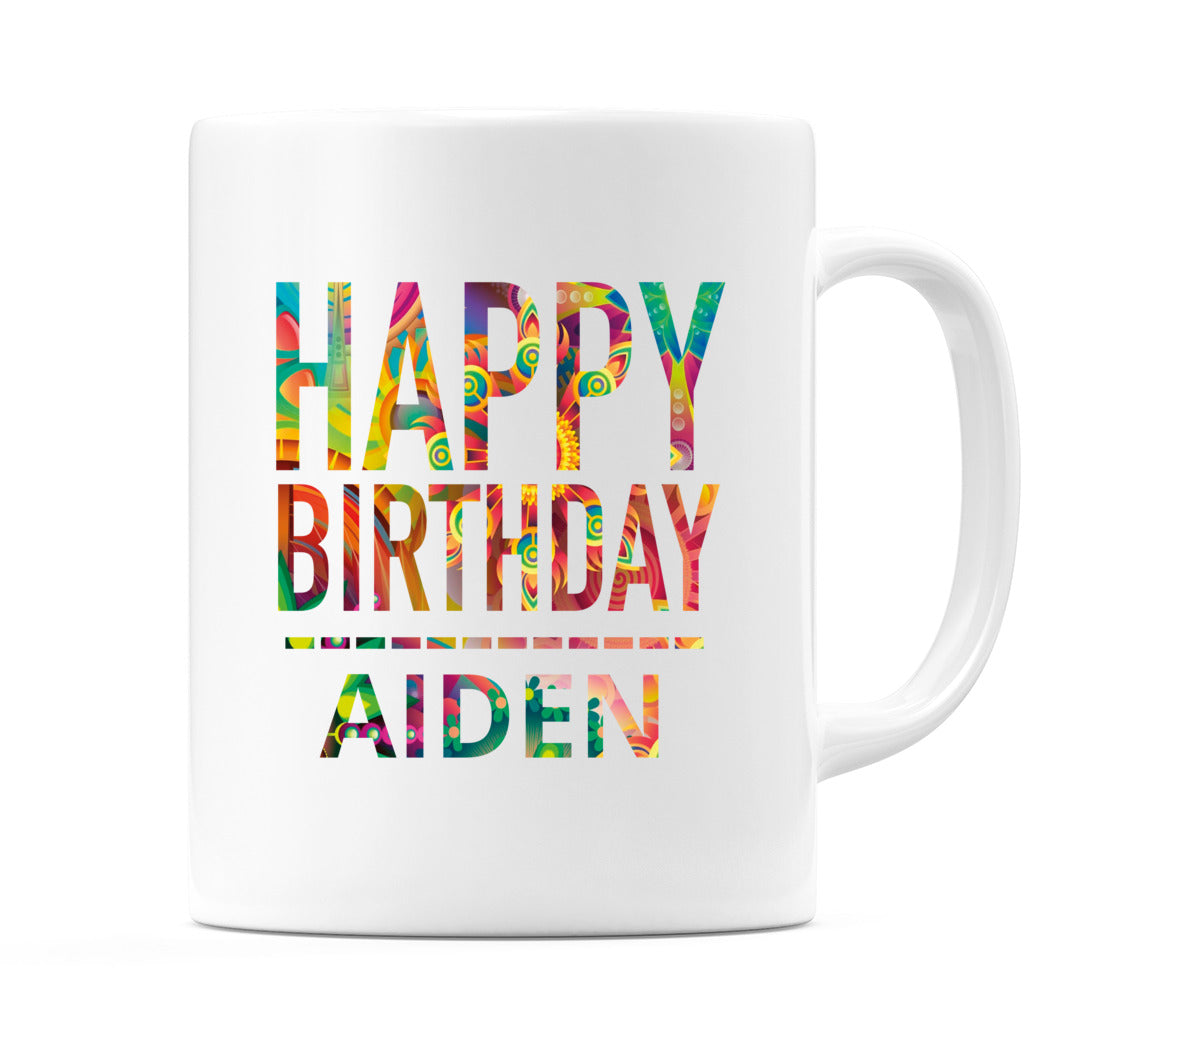 Happy Birthday Aiden (Tie Dye Effect) Mug Cup by WeDoMugs